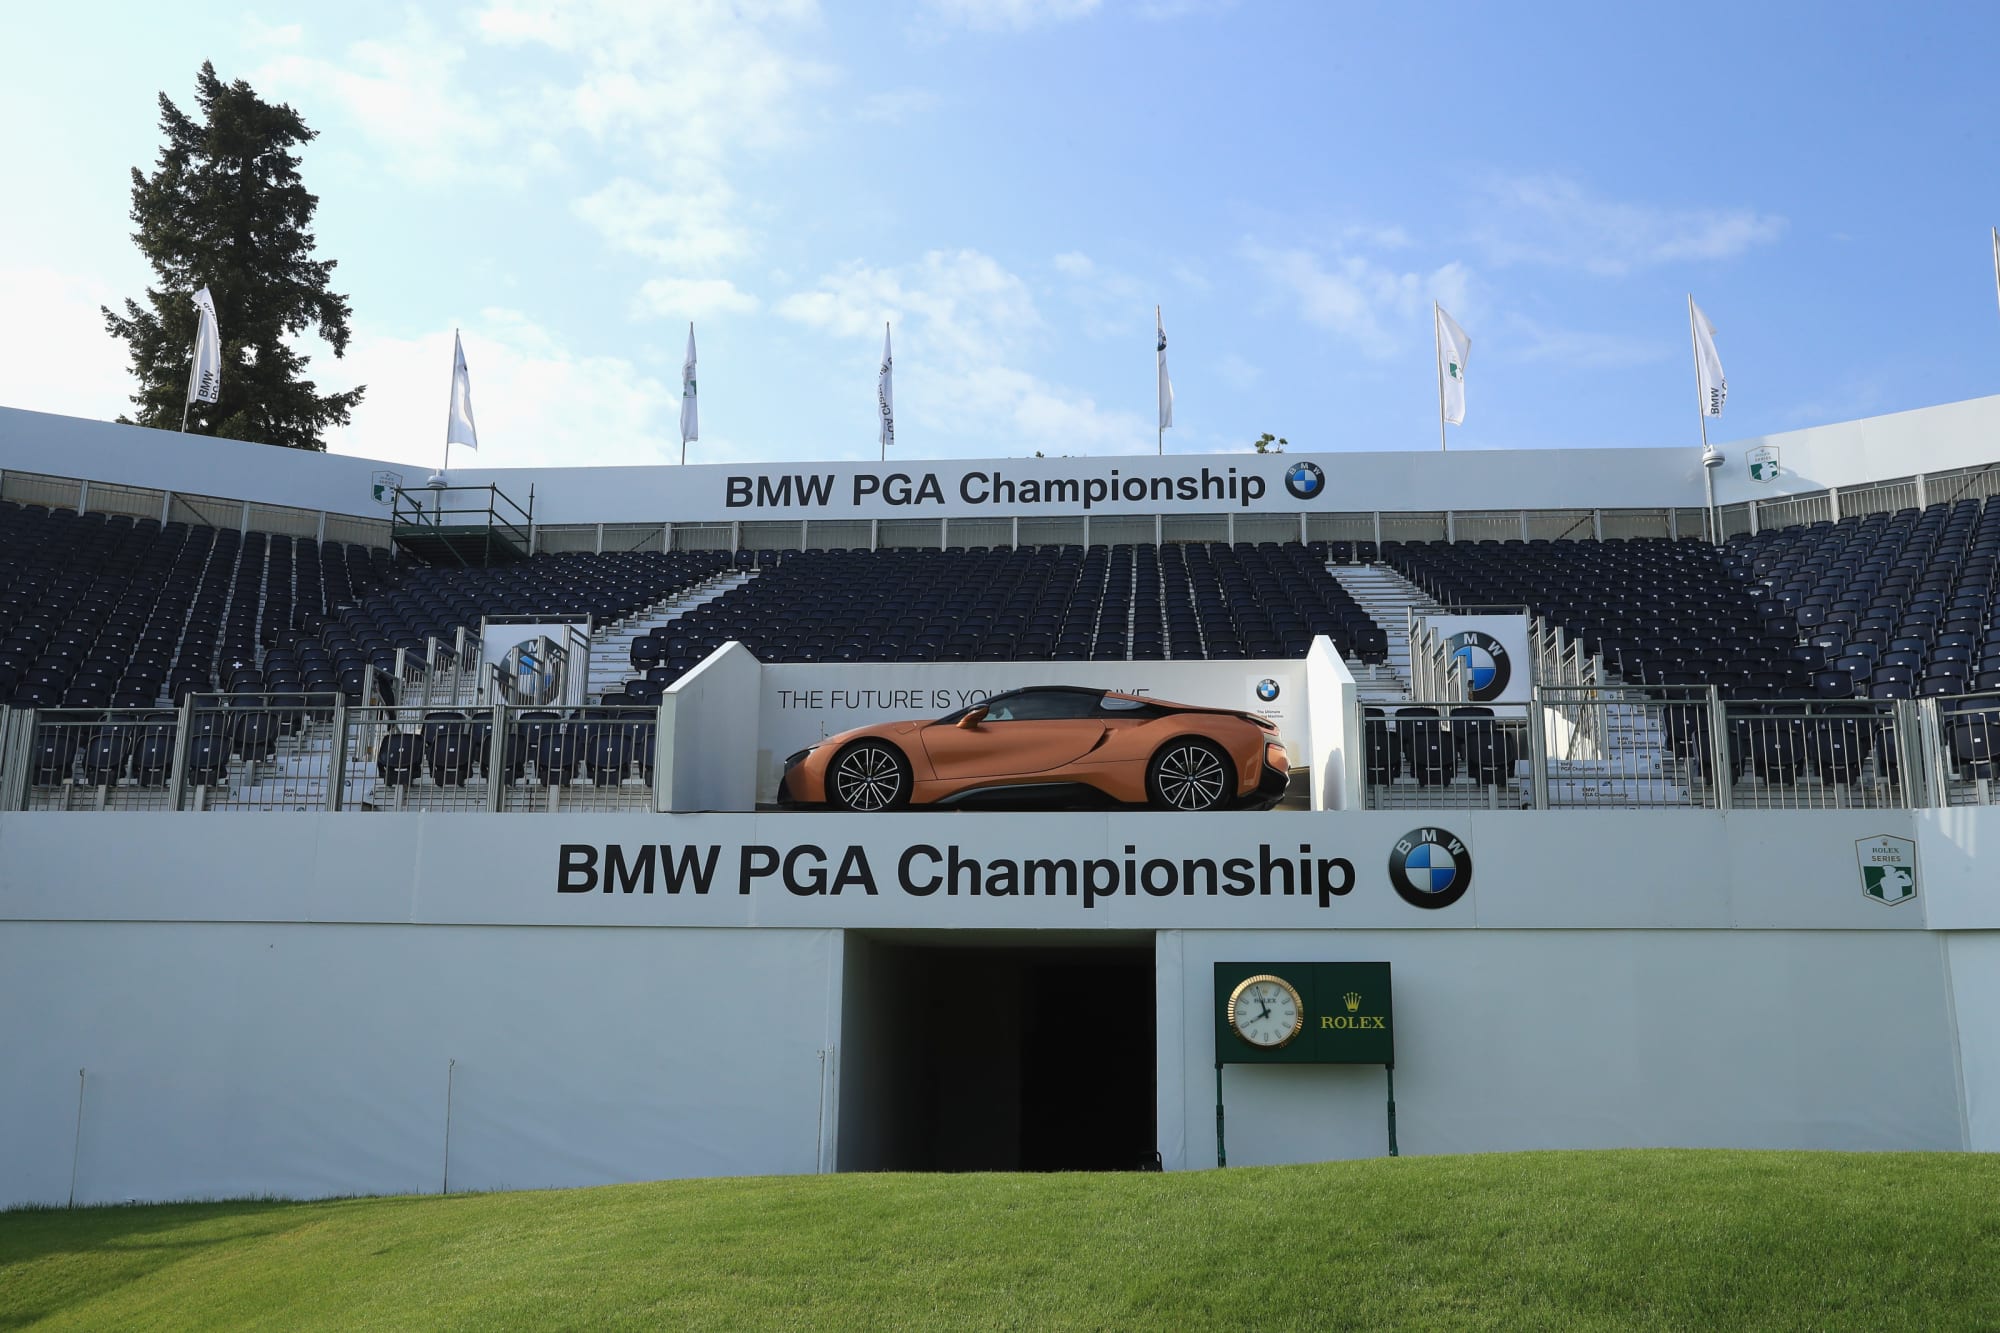 BMW PGA Championship Power Rankings Top 10 picks at Wentworth